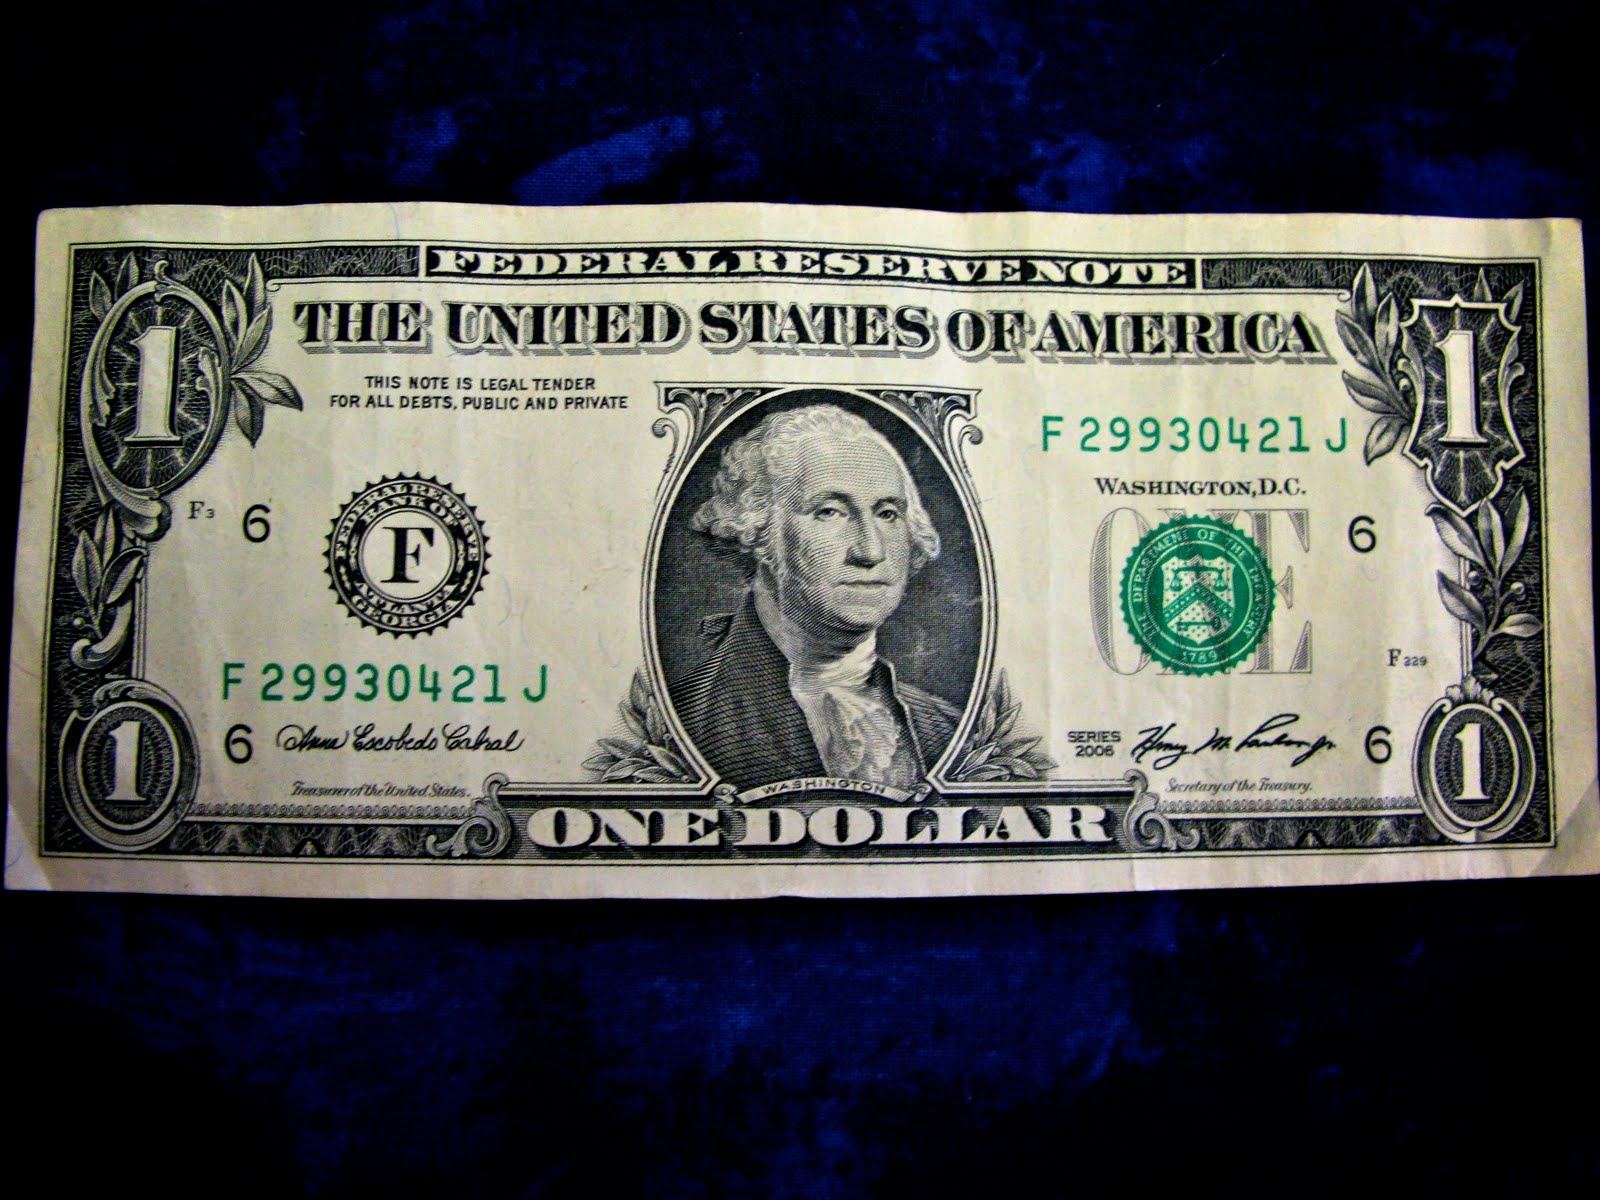 1 вопрос 1 доллар. Один доллар. Один доллар f. Американские доллары купюры. Хобби доллар.